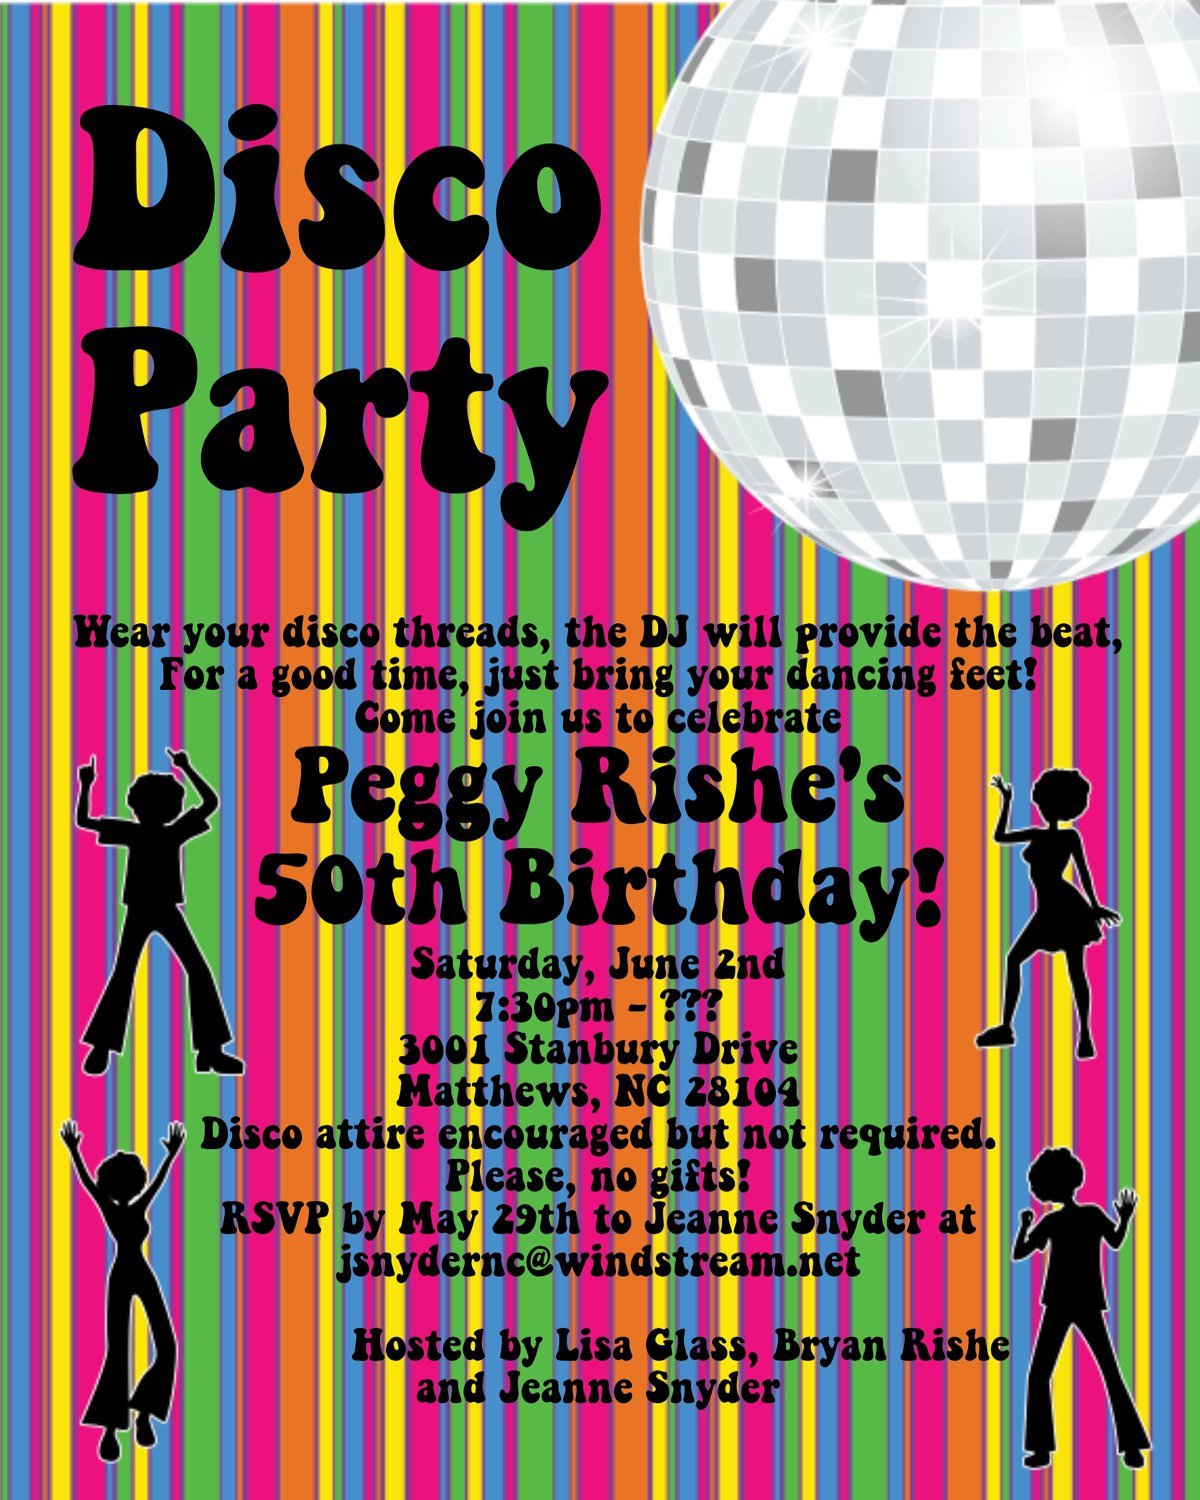 Disco disco party party remix. Пригласительные в стиле диско. Пригласительные в стиле диско вечеринка. Приглашение на вечеринку в стиле диско. Пригласительные на диско вечеринку.